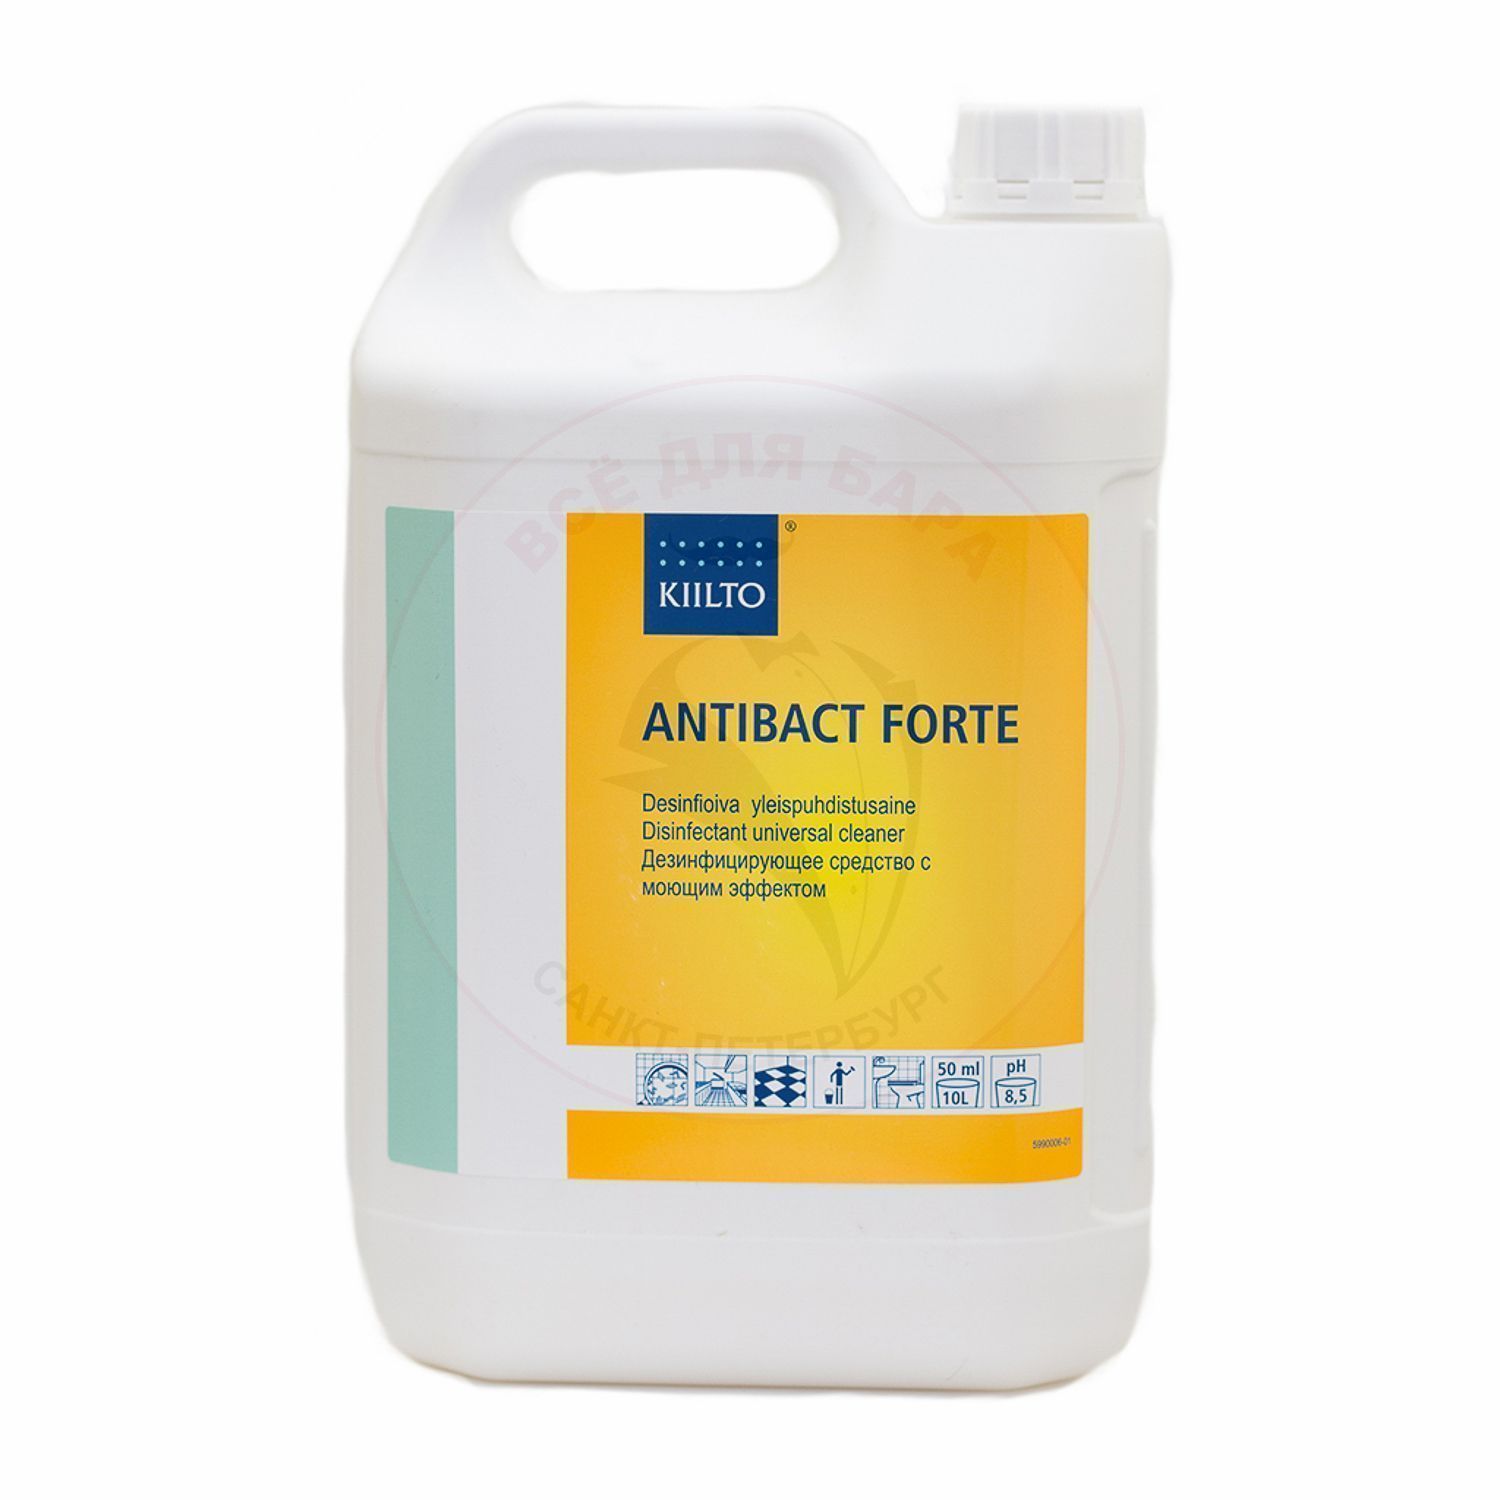 Kiilto Antibact Forte дезинфицирующее средство с моющим эффектом, 5 л